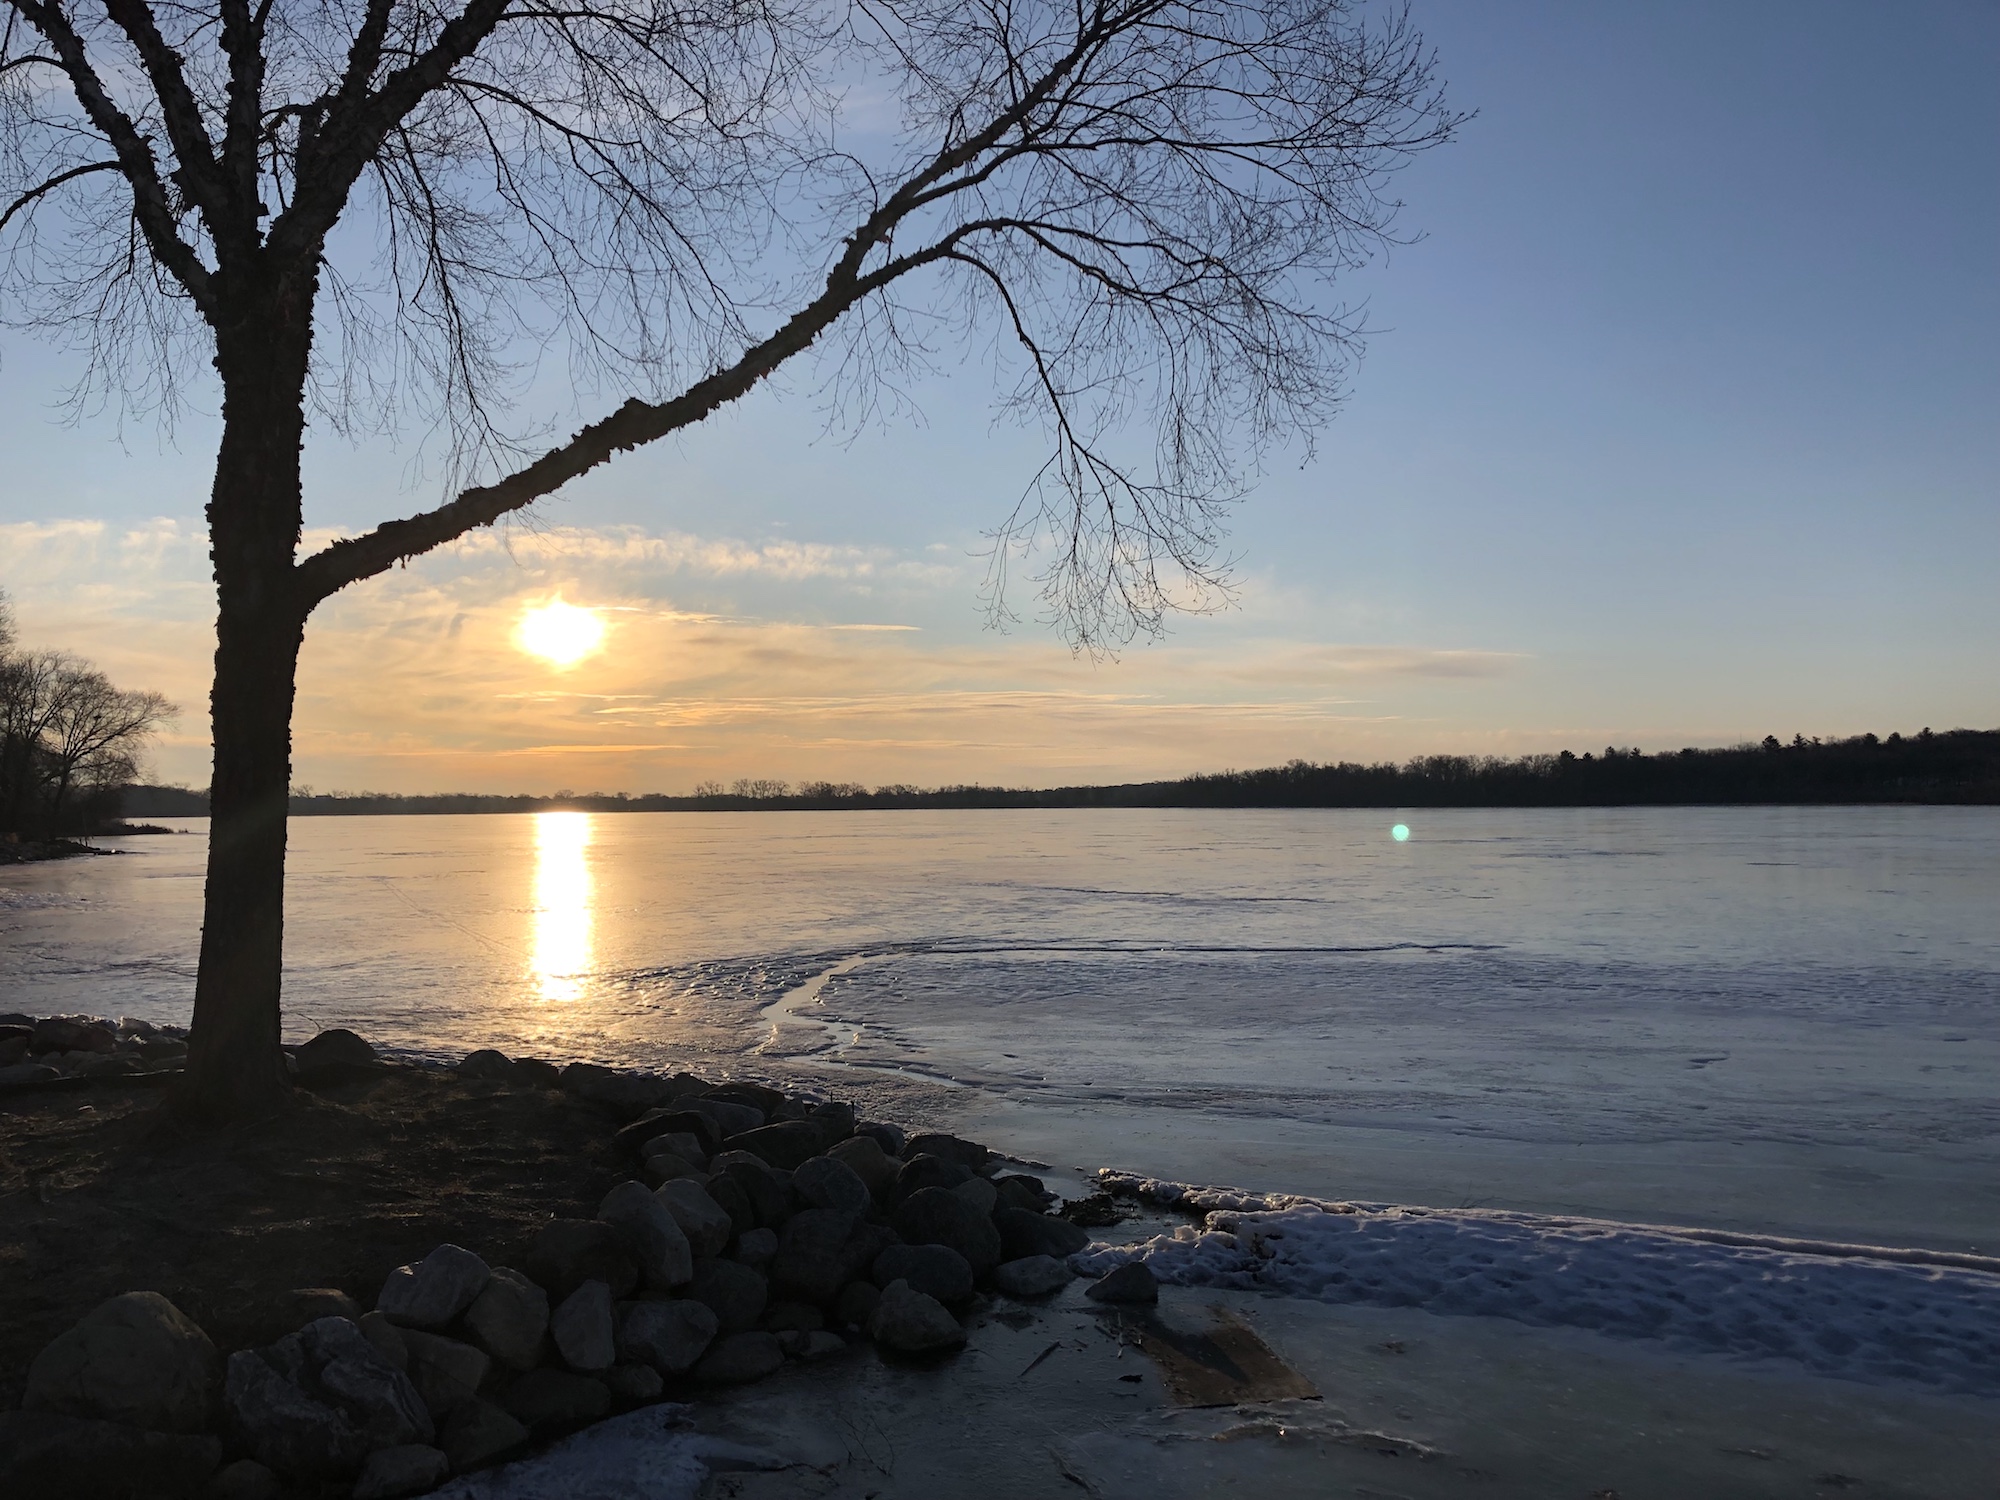 Lake Wingra on March 17, 2019.